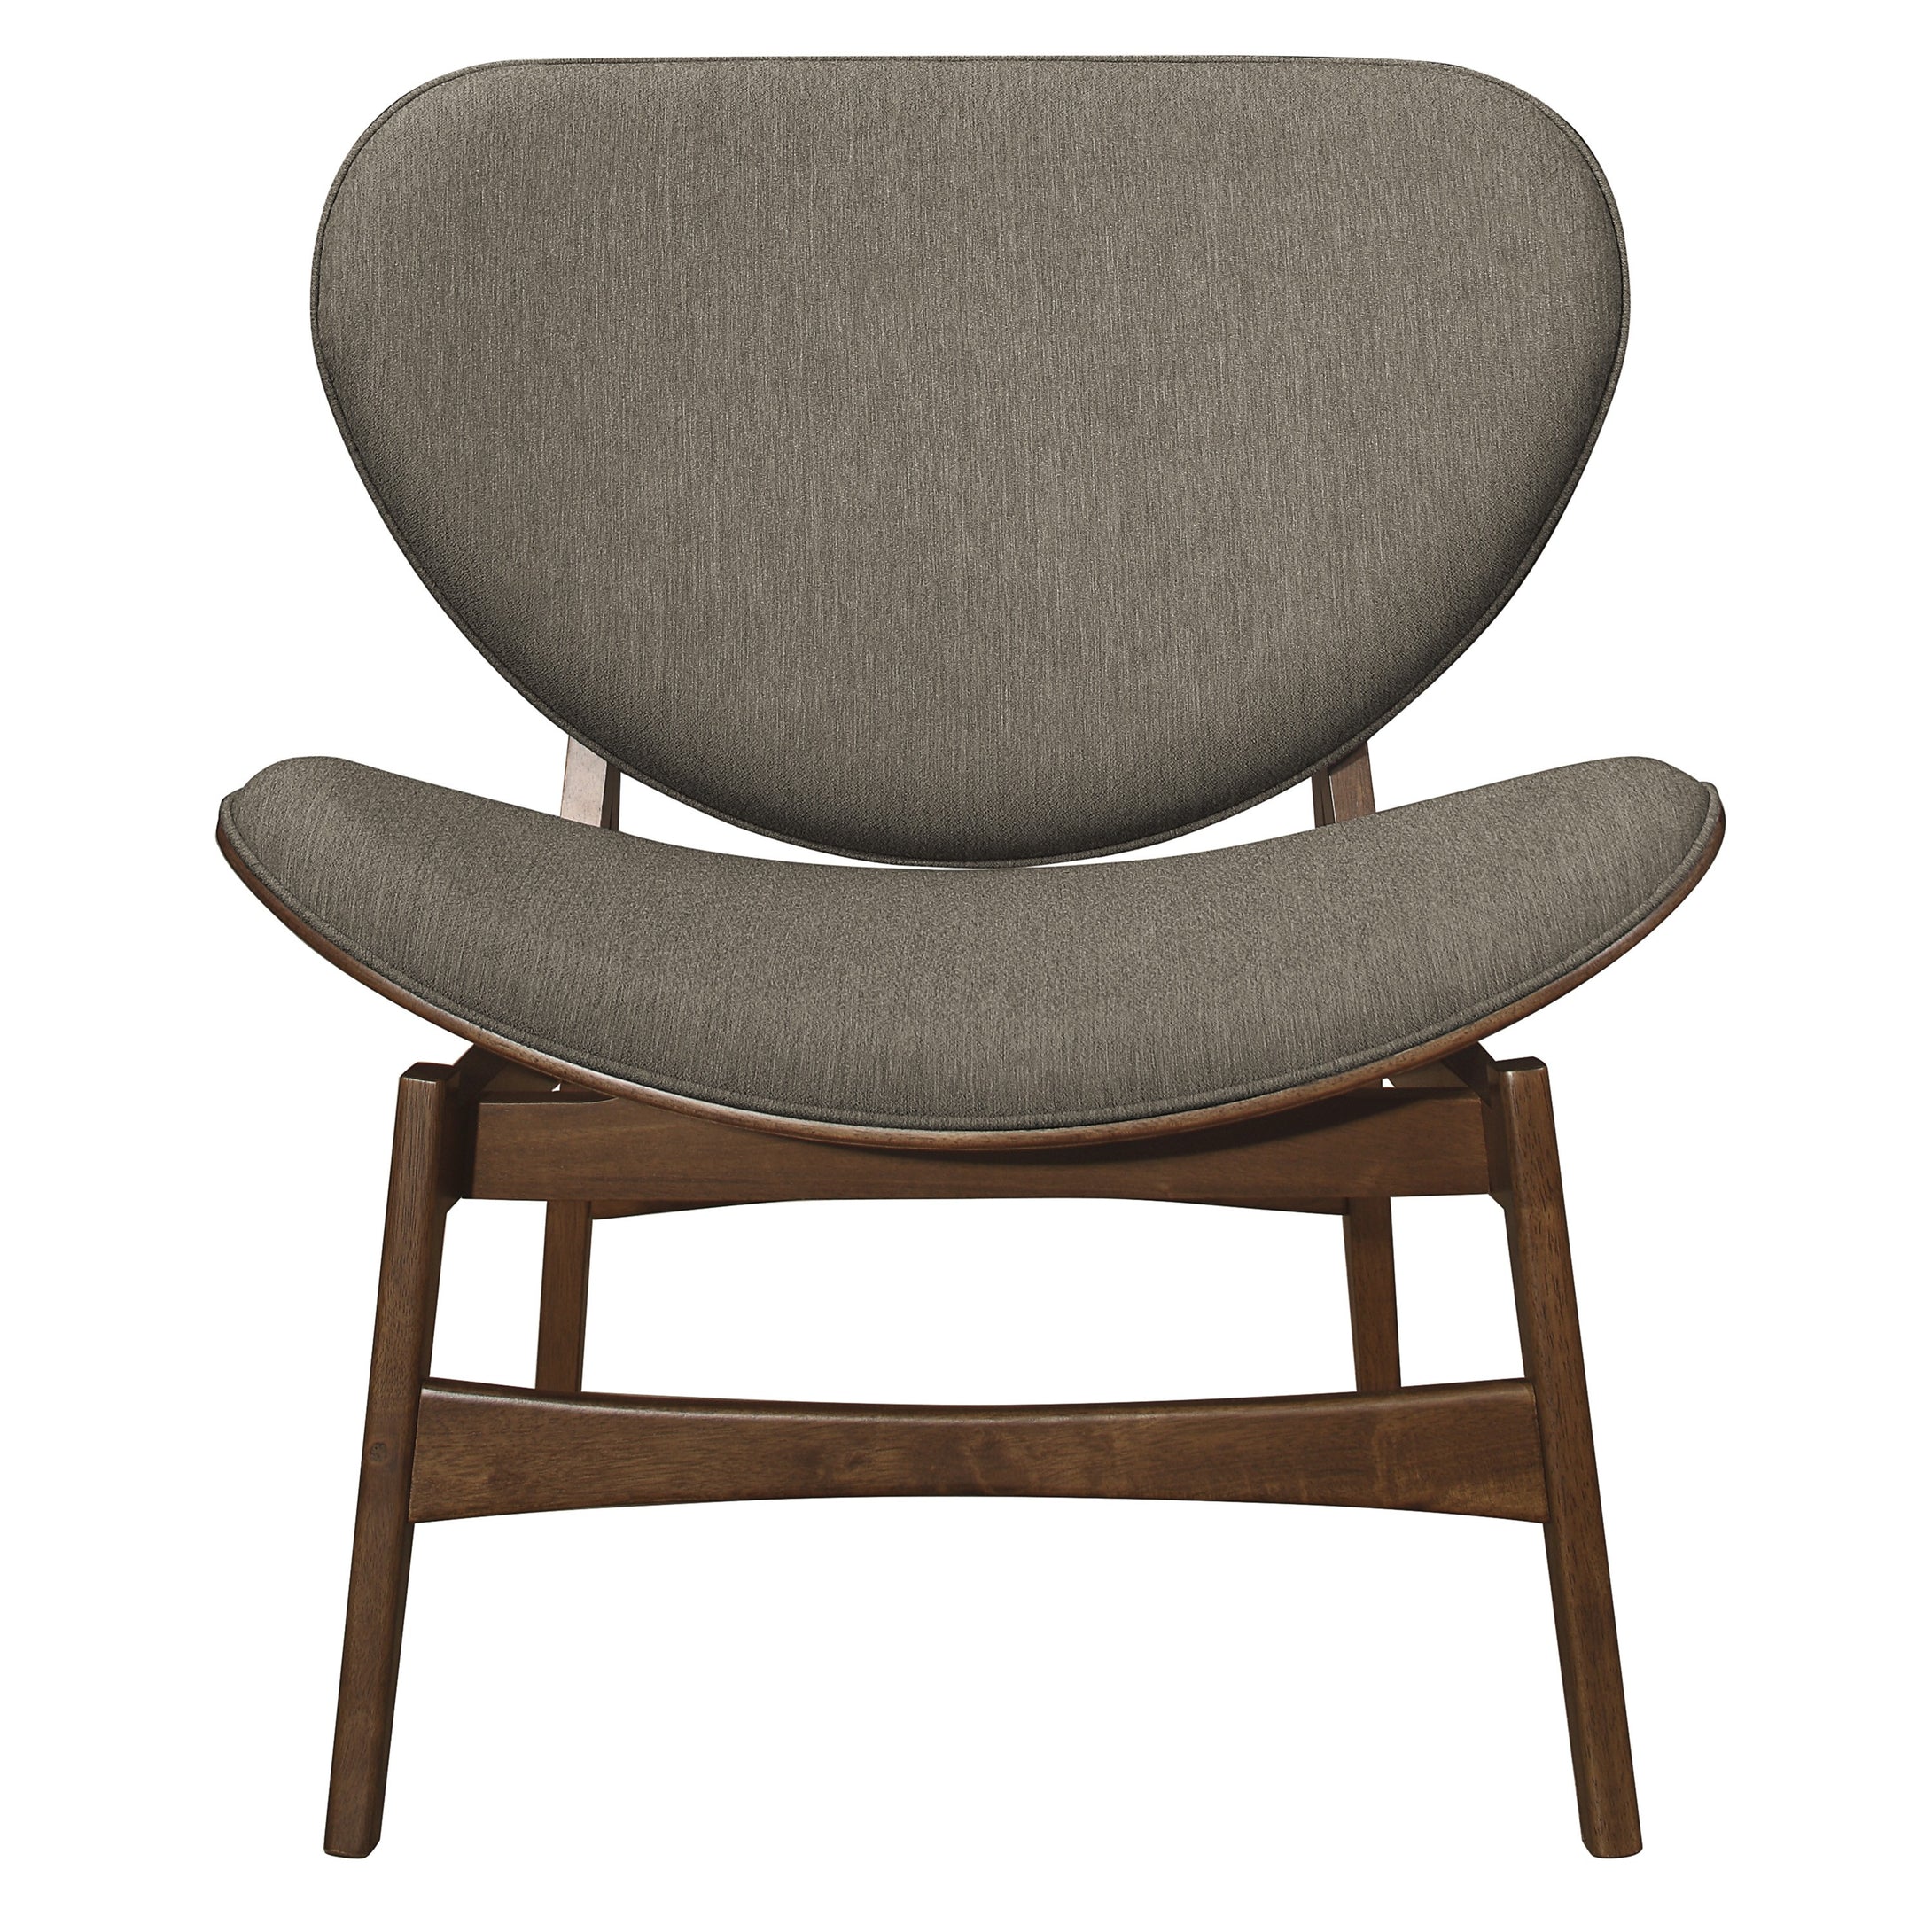 1135BRG-1 Lounge Chair